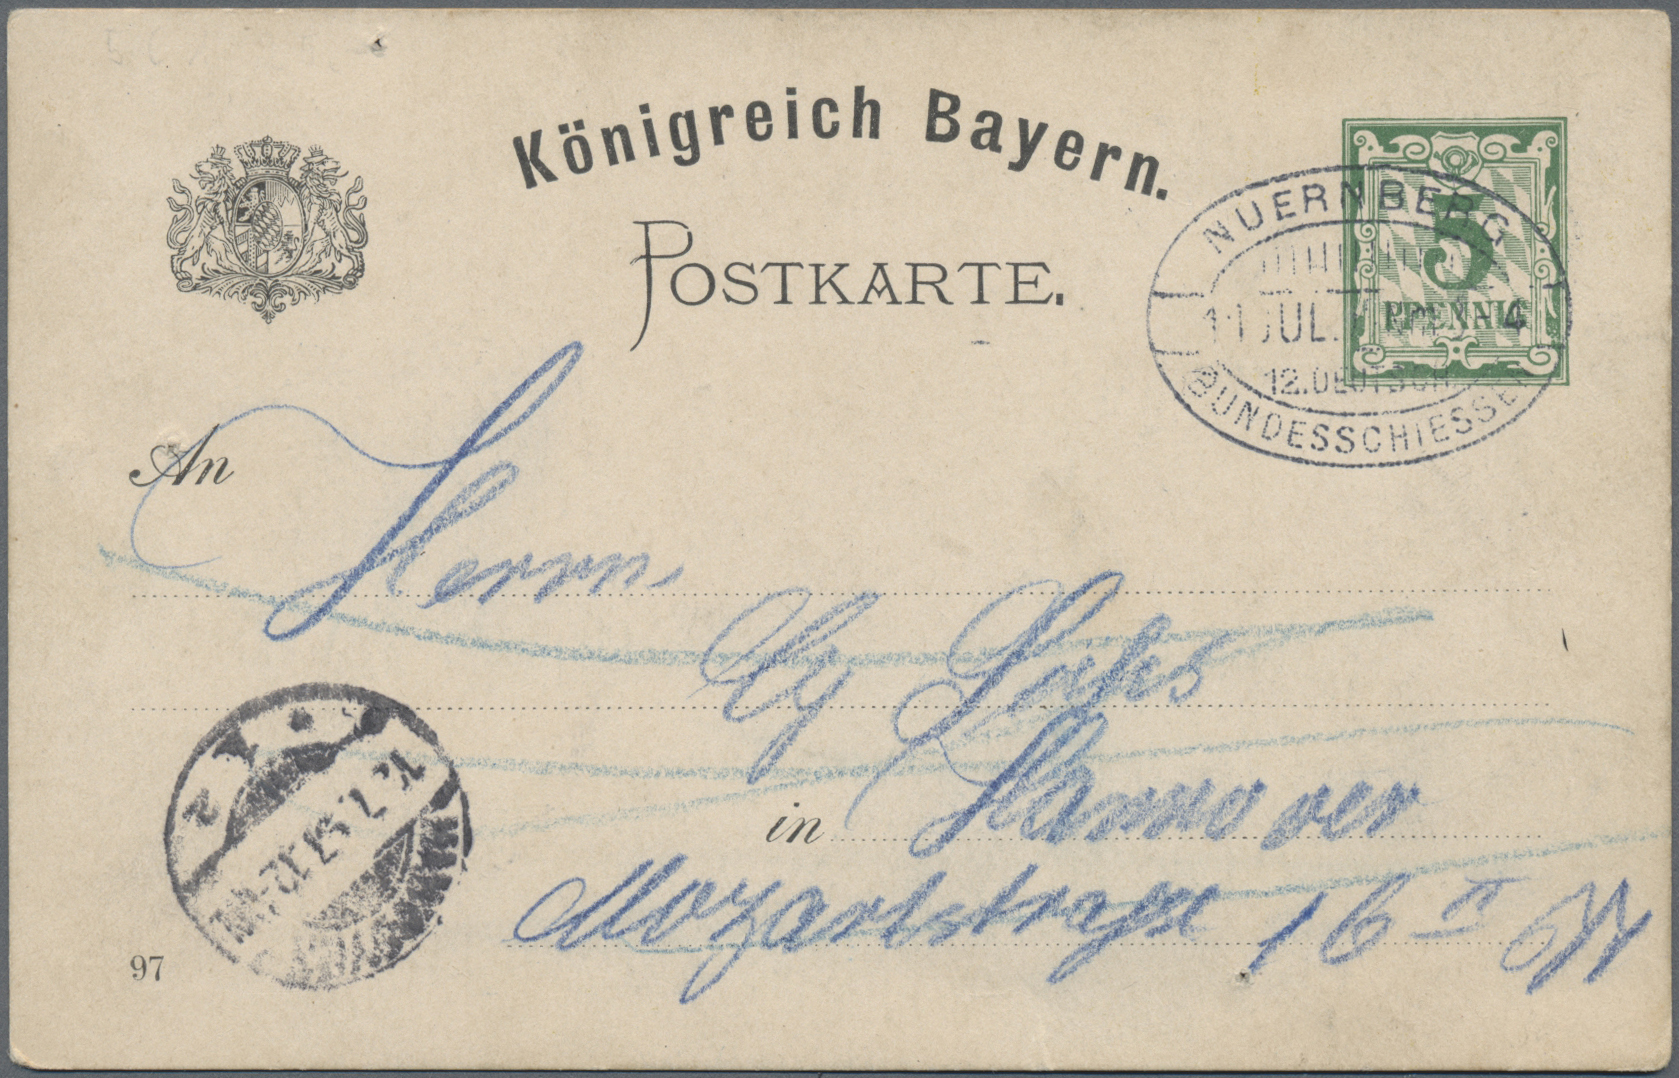 Lot 35153 - bayern - ganzsachen  -  Auktionshaus Christoph Gärtner GmbH & Co. KG Sale #44 Collections Germany